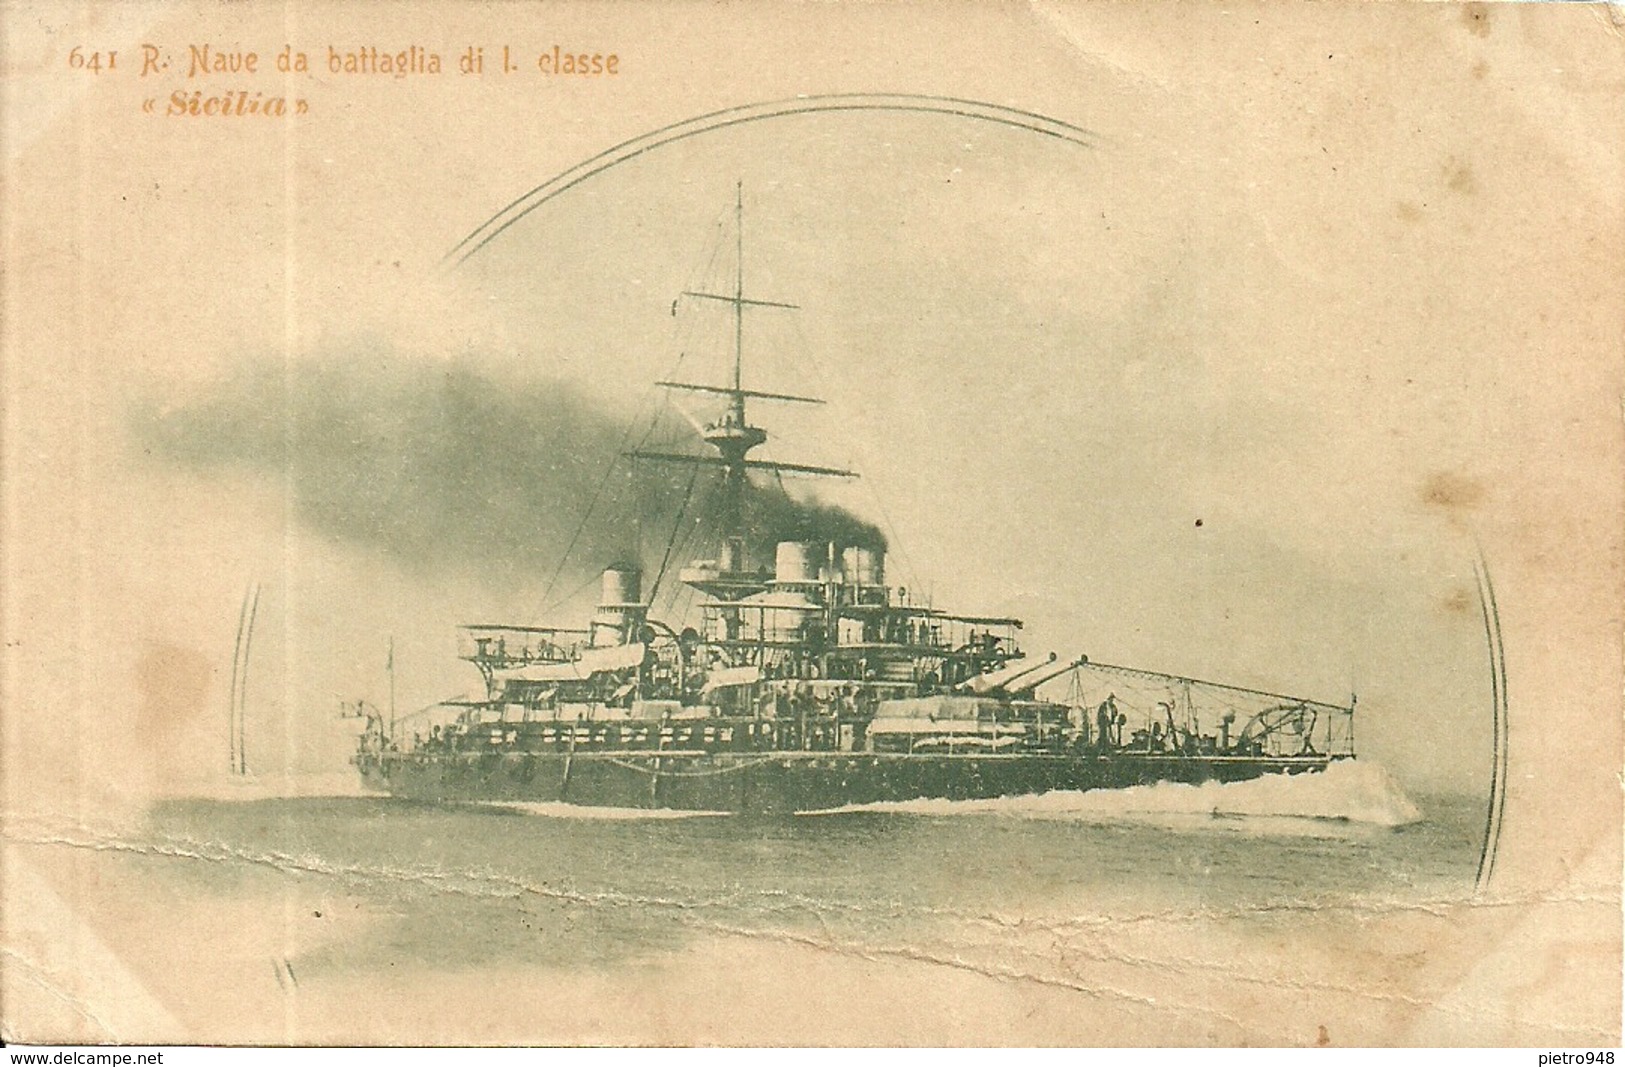 Regia Marina Militare Italiana, Regia Nave Corazzata Da Battaglia Di 1^ Classe "Sicilia" - Guerra